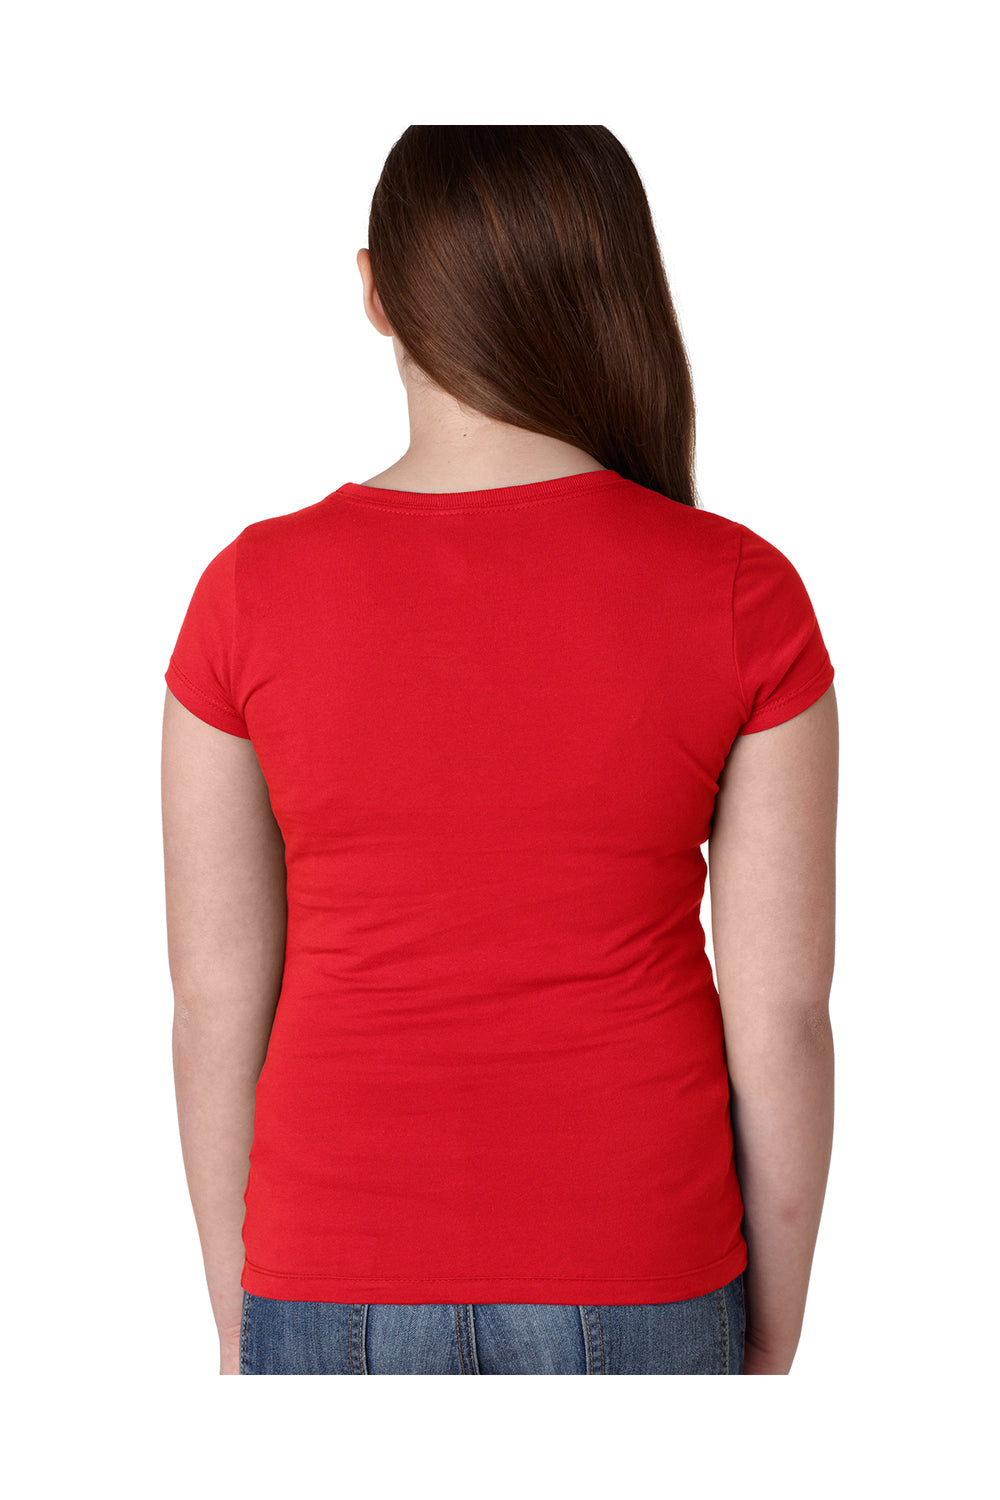 Next Level N3710 Youth Princess Fine Jersey Short Sleeve Crewneck T-Shirt Red Back